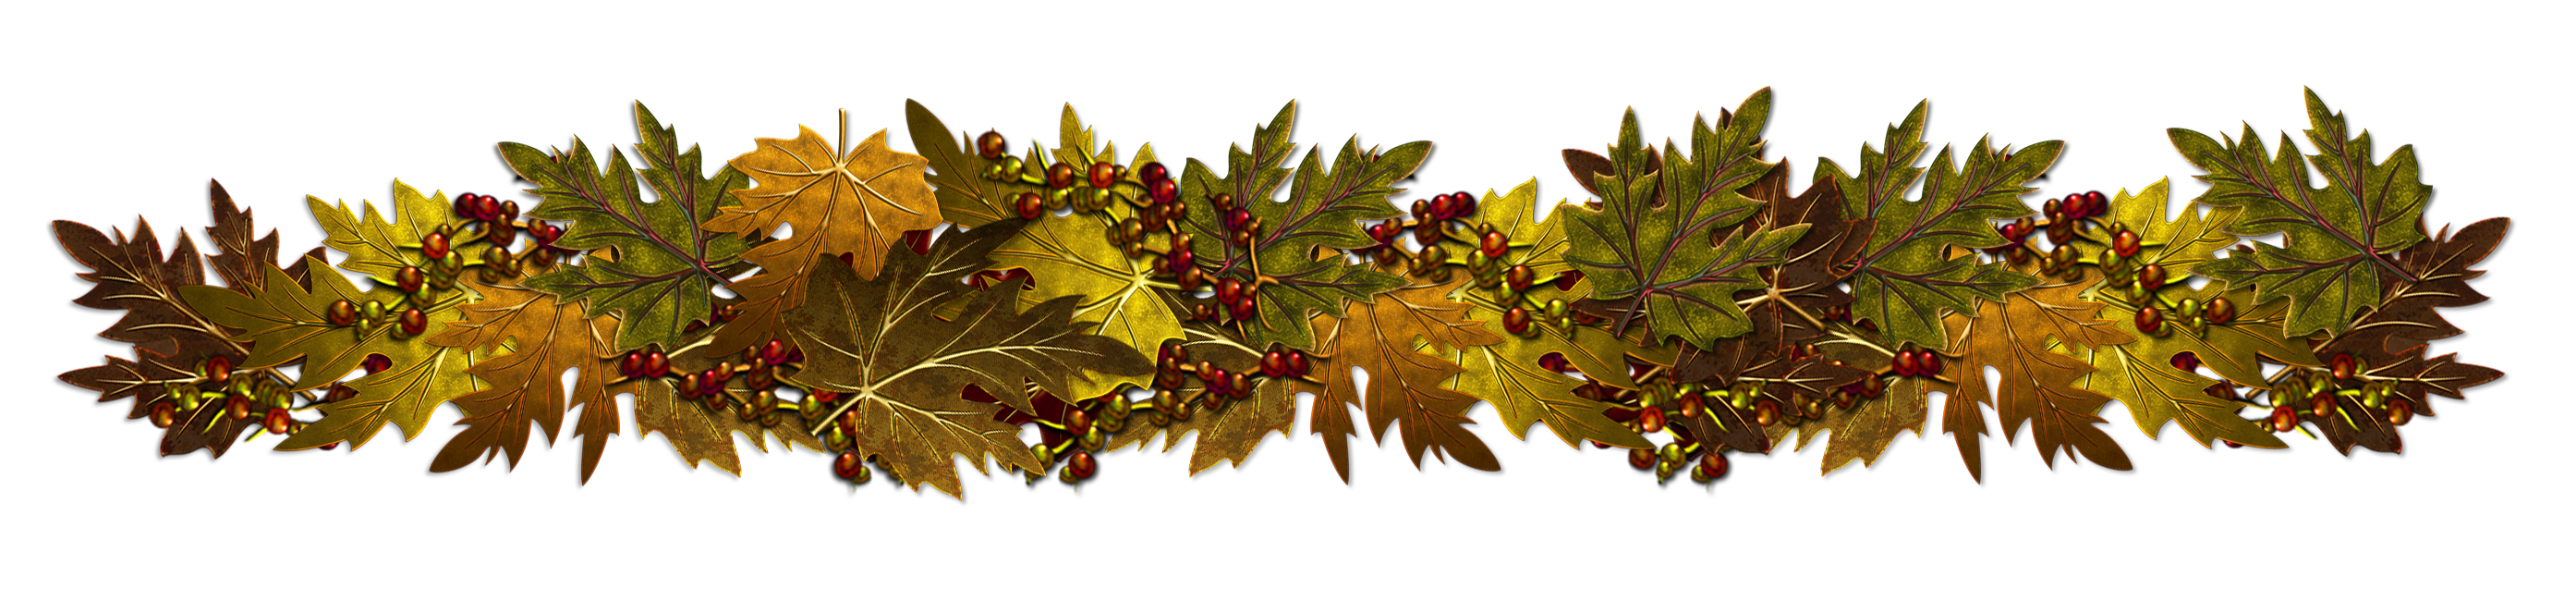 Decorative clipart autumn. Fall border png pinterest